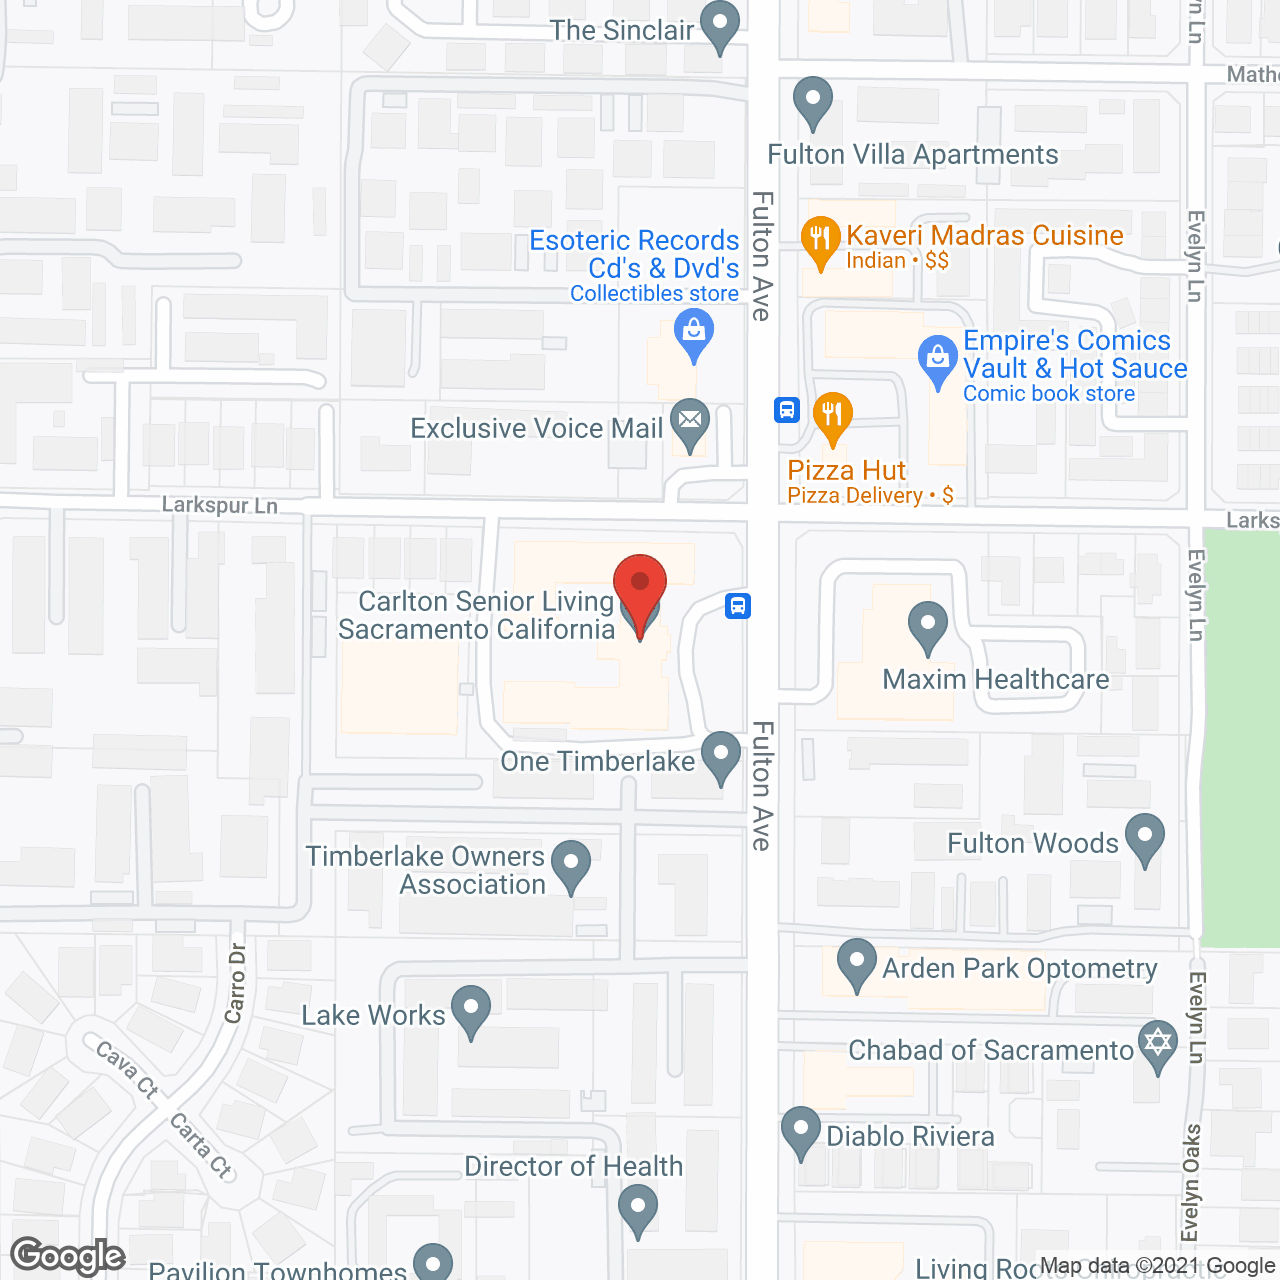 Carlton Plaza of Sacramento in google map